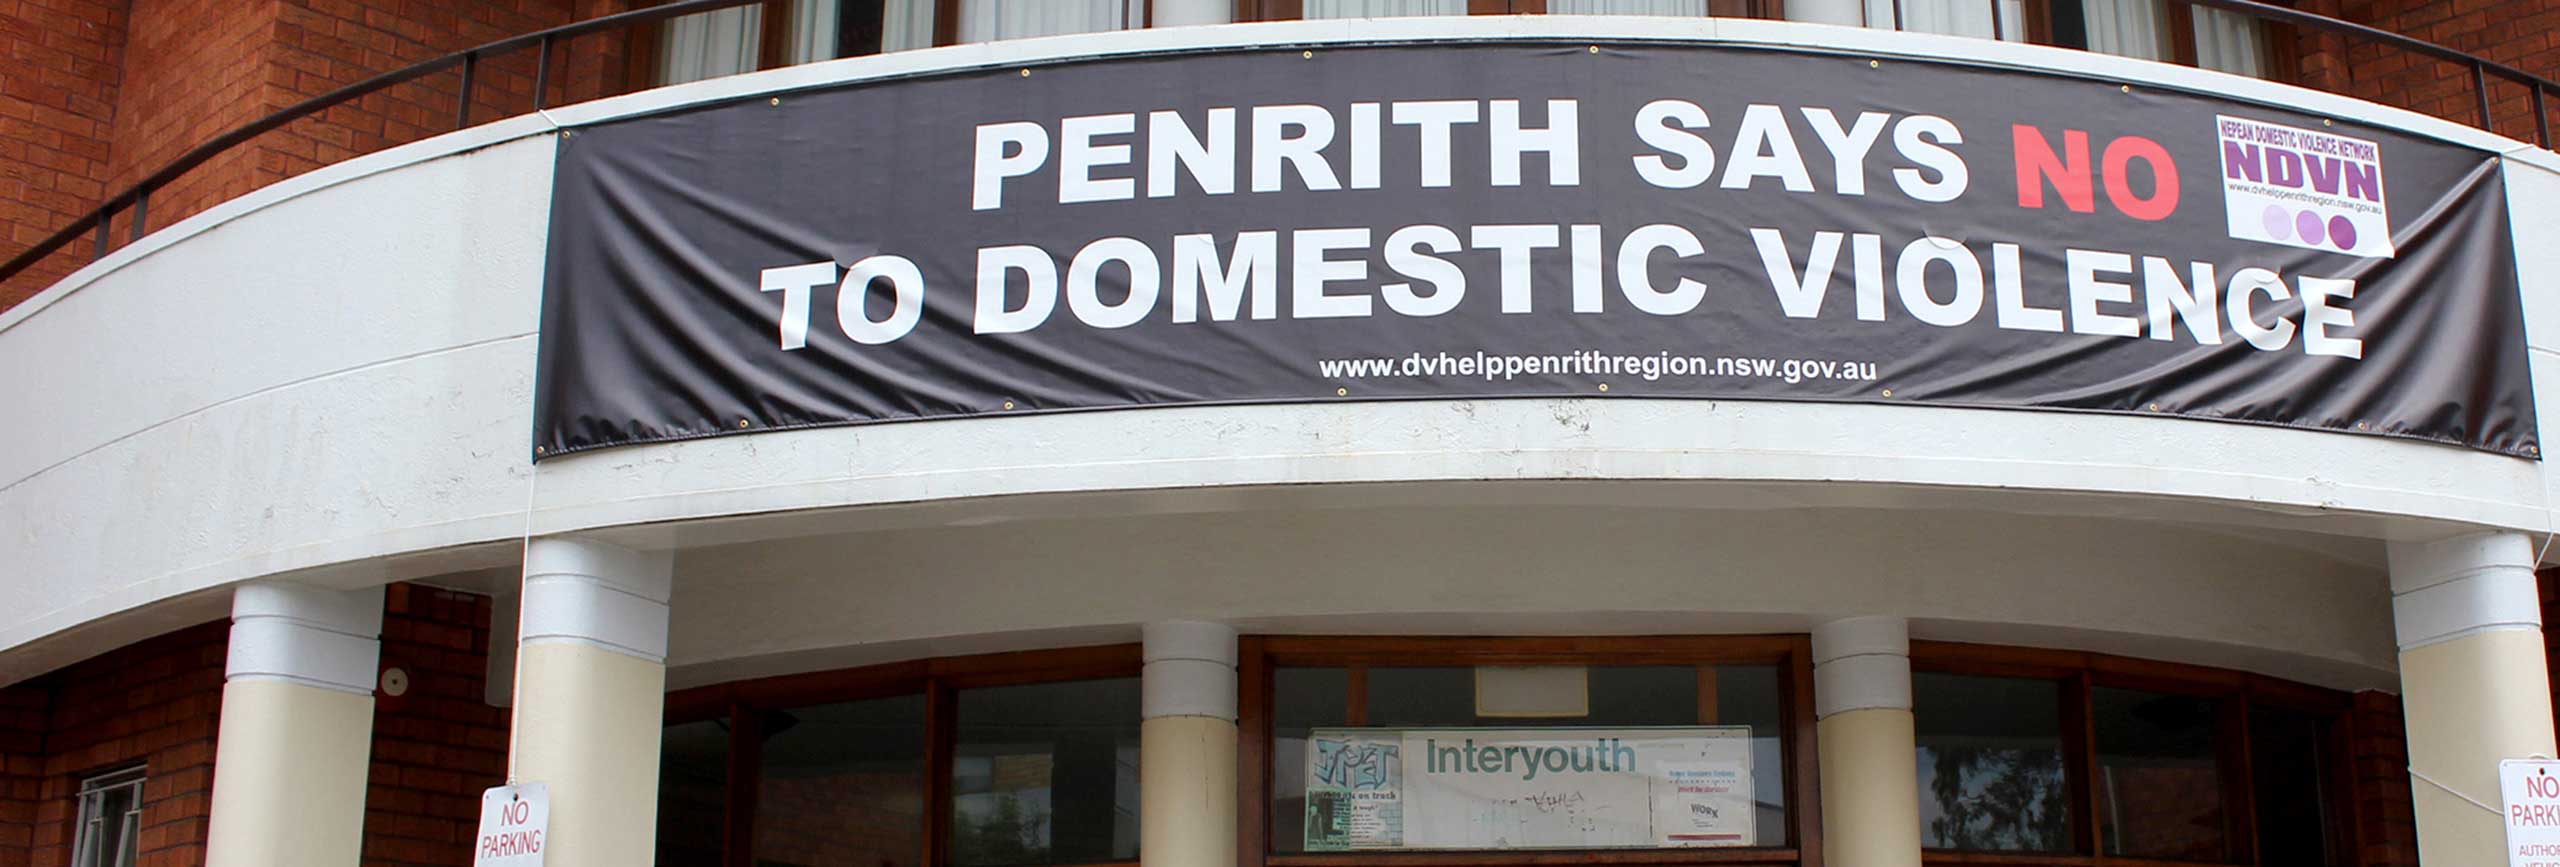 Penrith says no to domestic violence